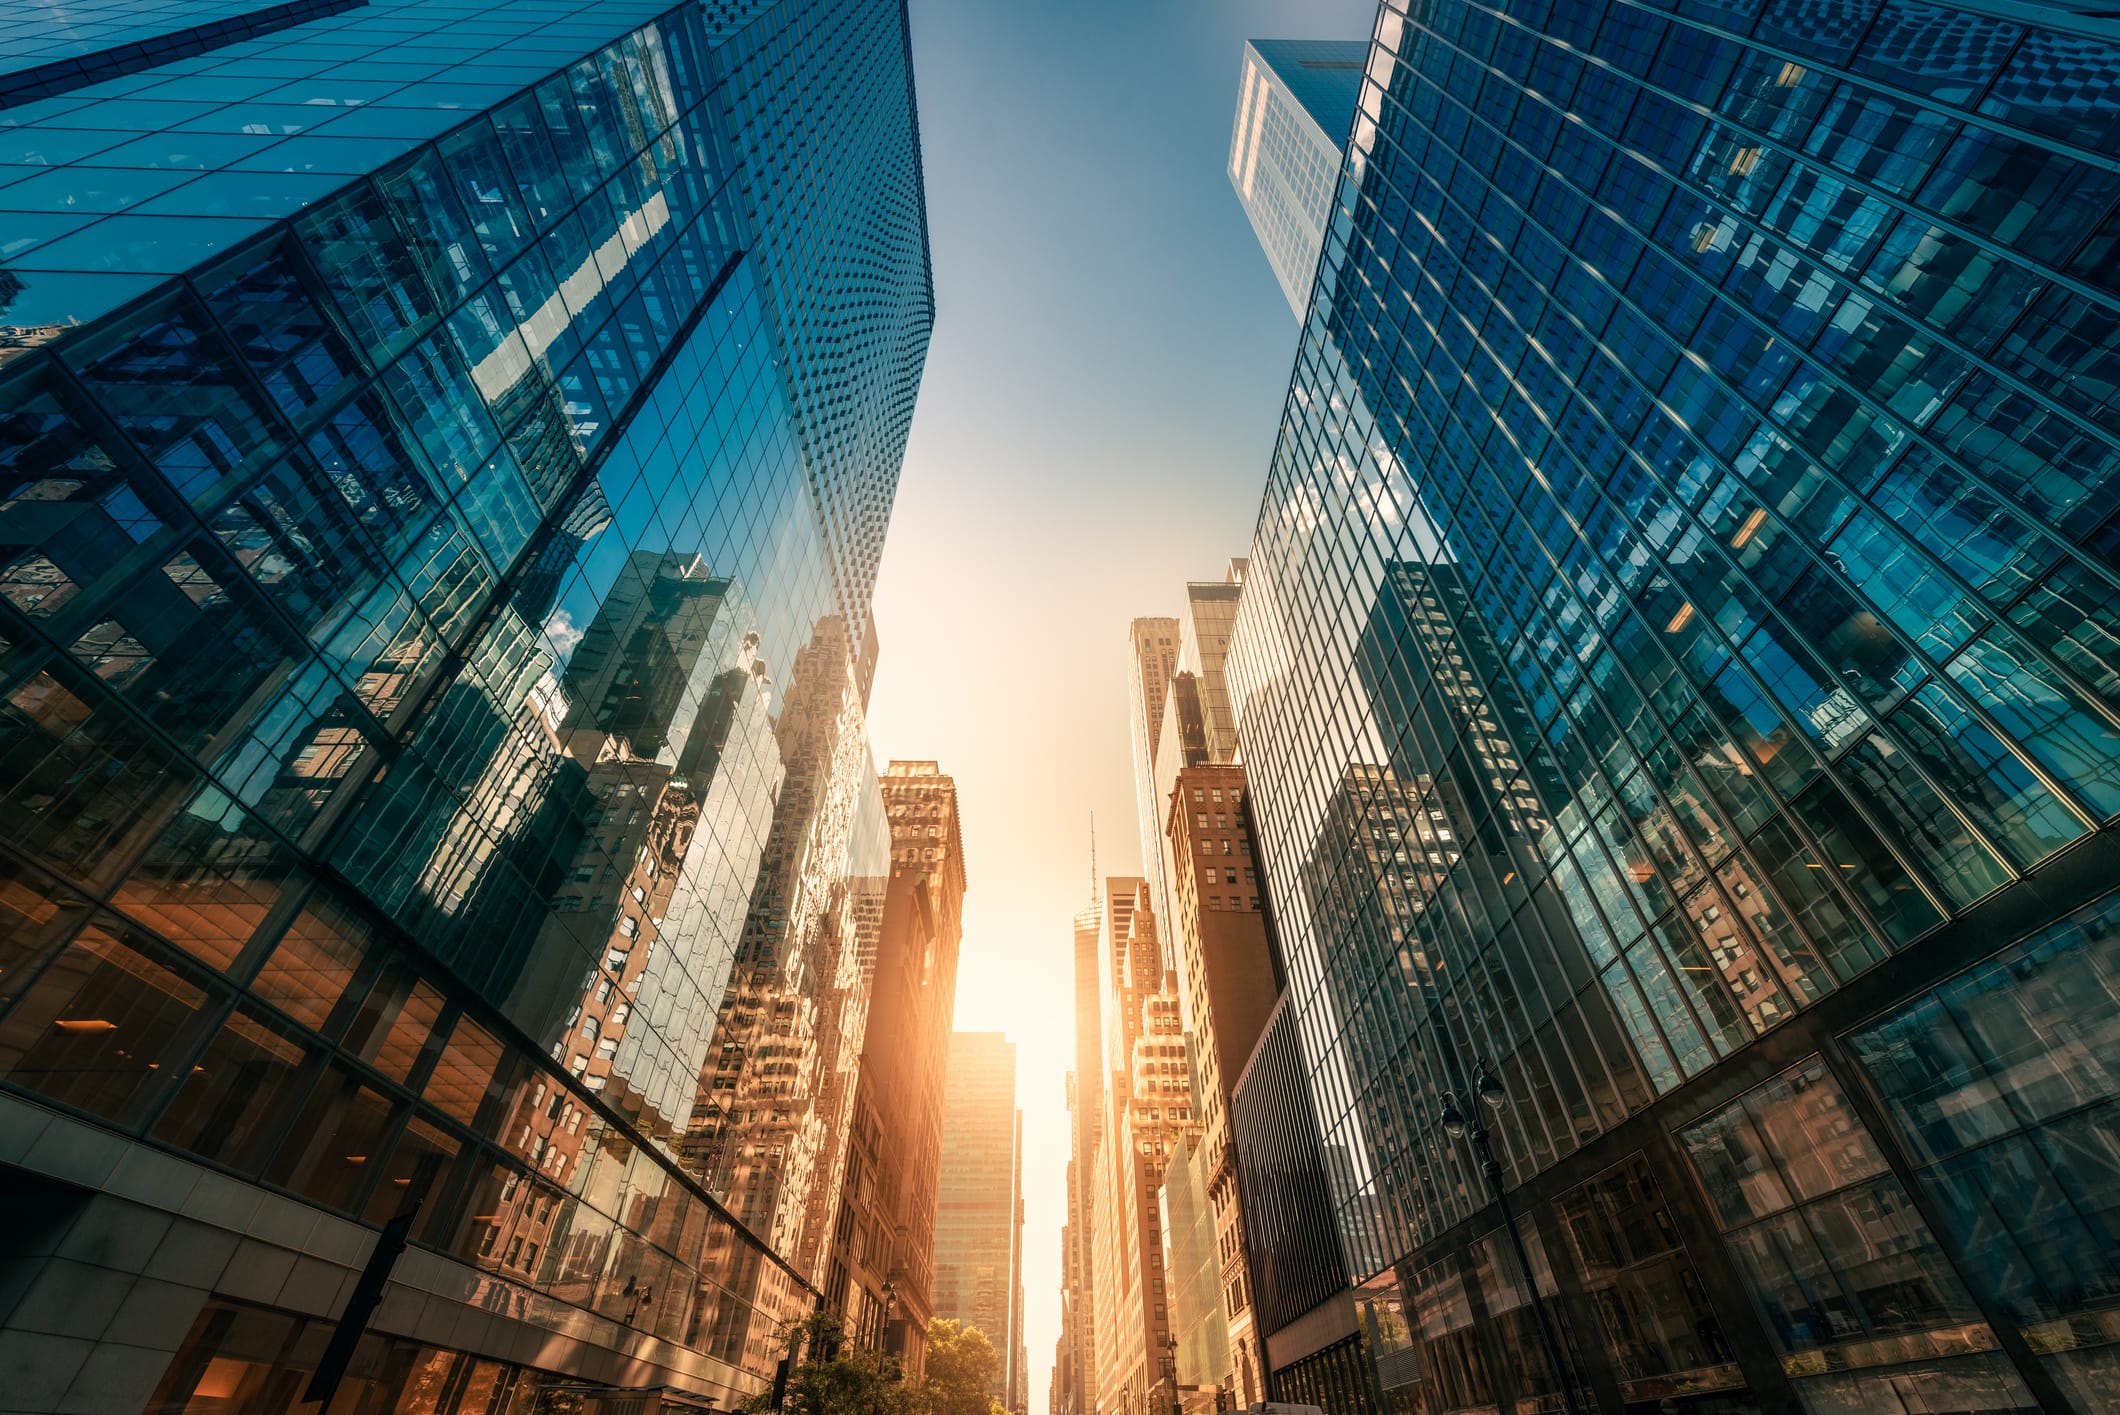 Office skyscraper Reflection in the sunlight